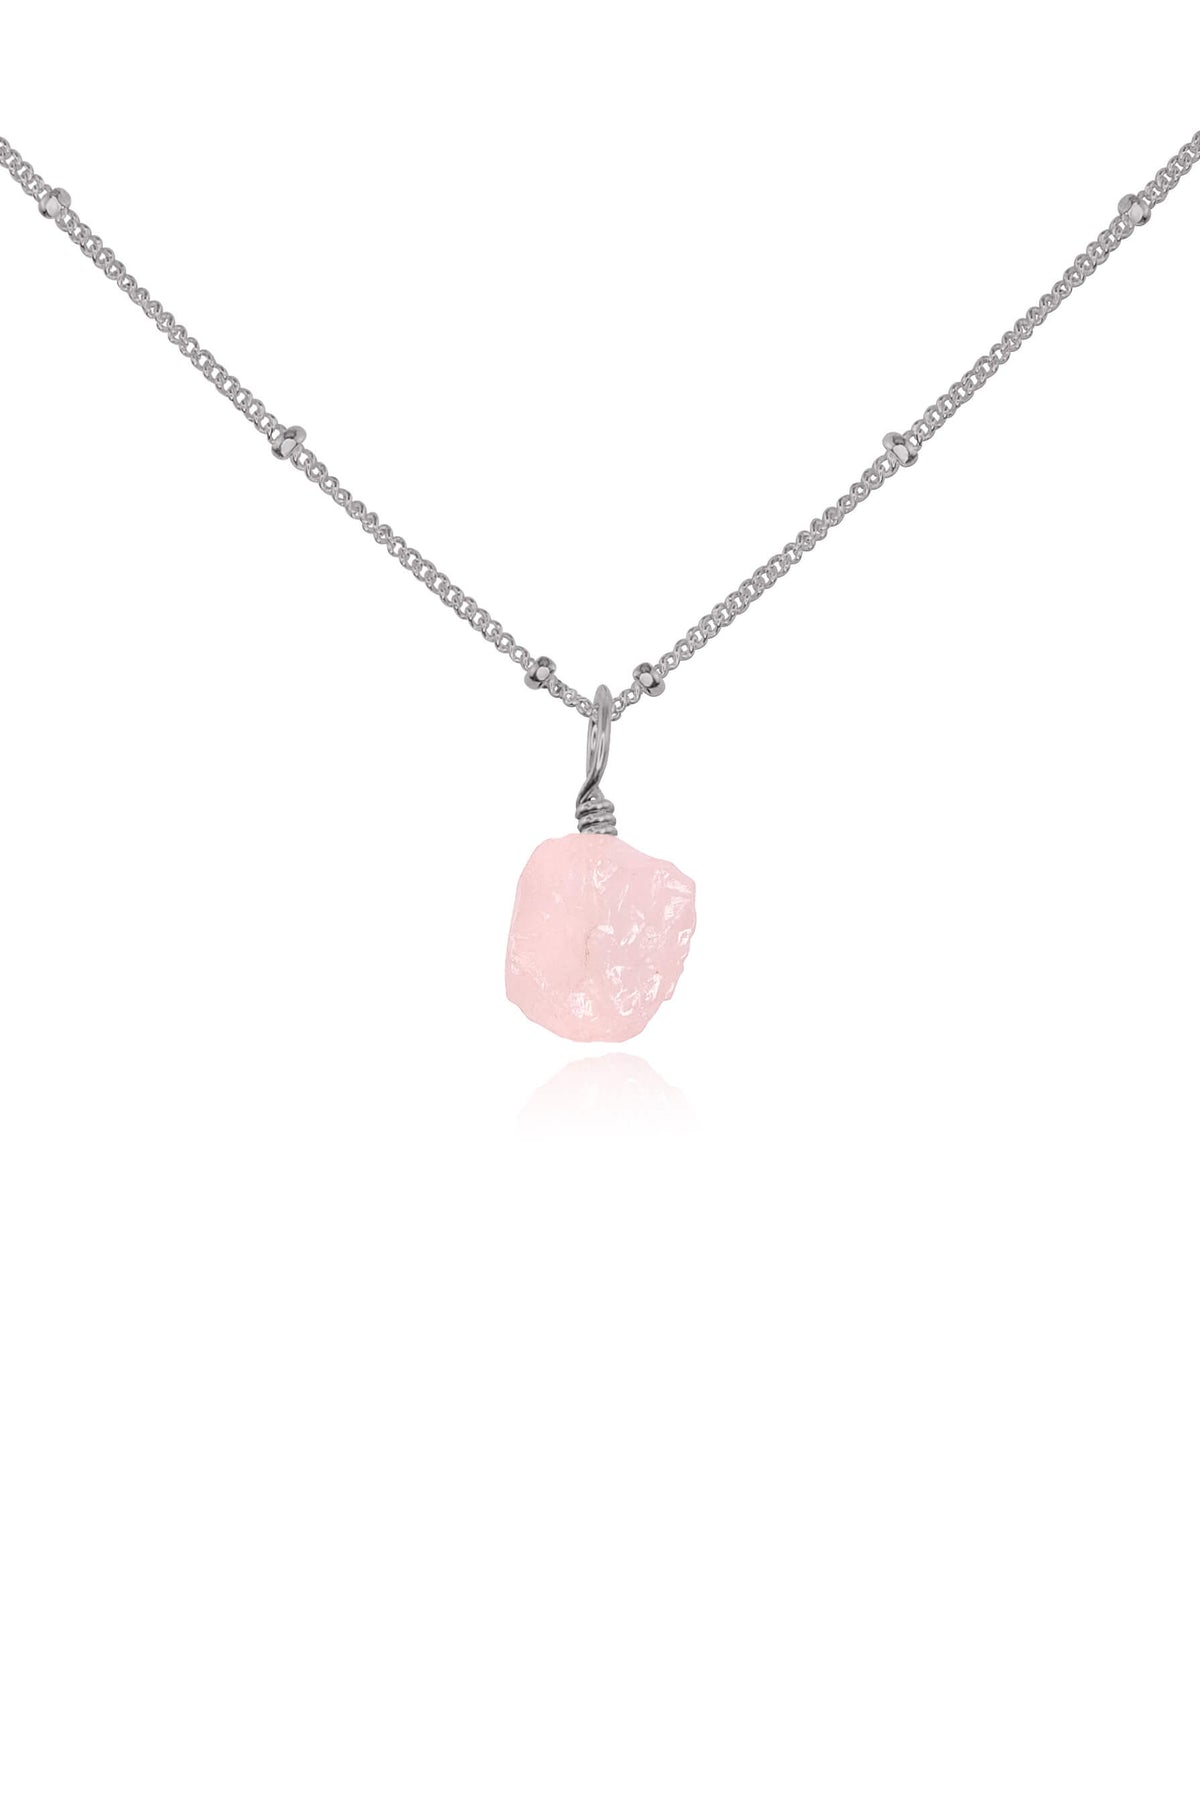 Raw Crystal Pendant Necklace - Rose Quartz - Stainless Steel - Luna Tide Handmade Jewellery